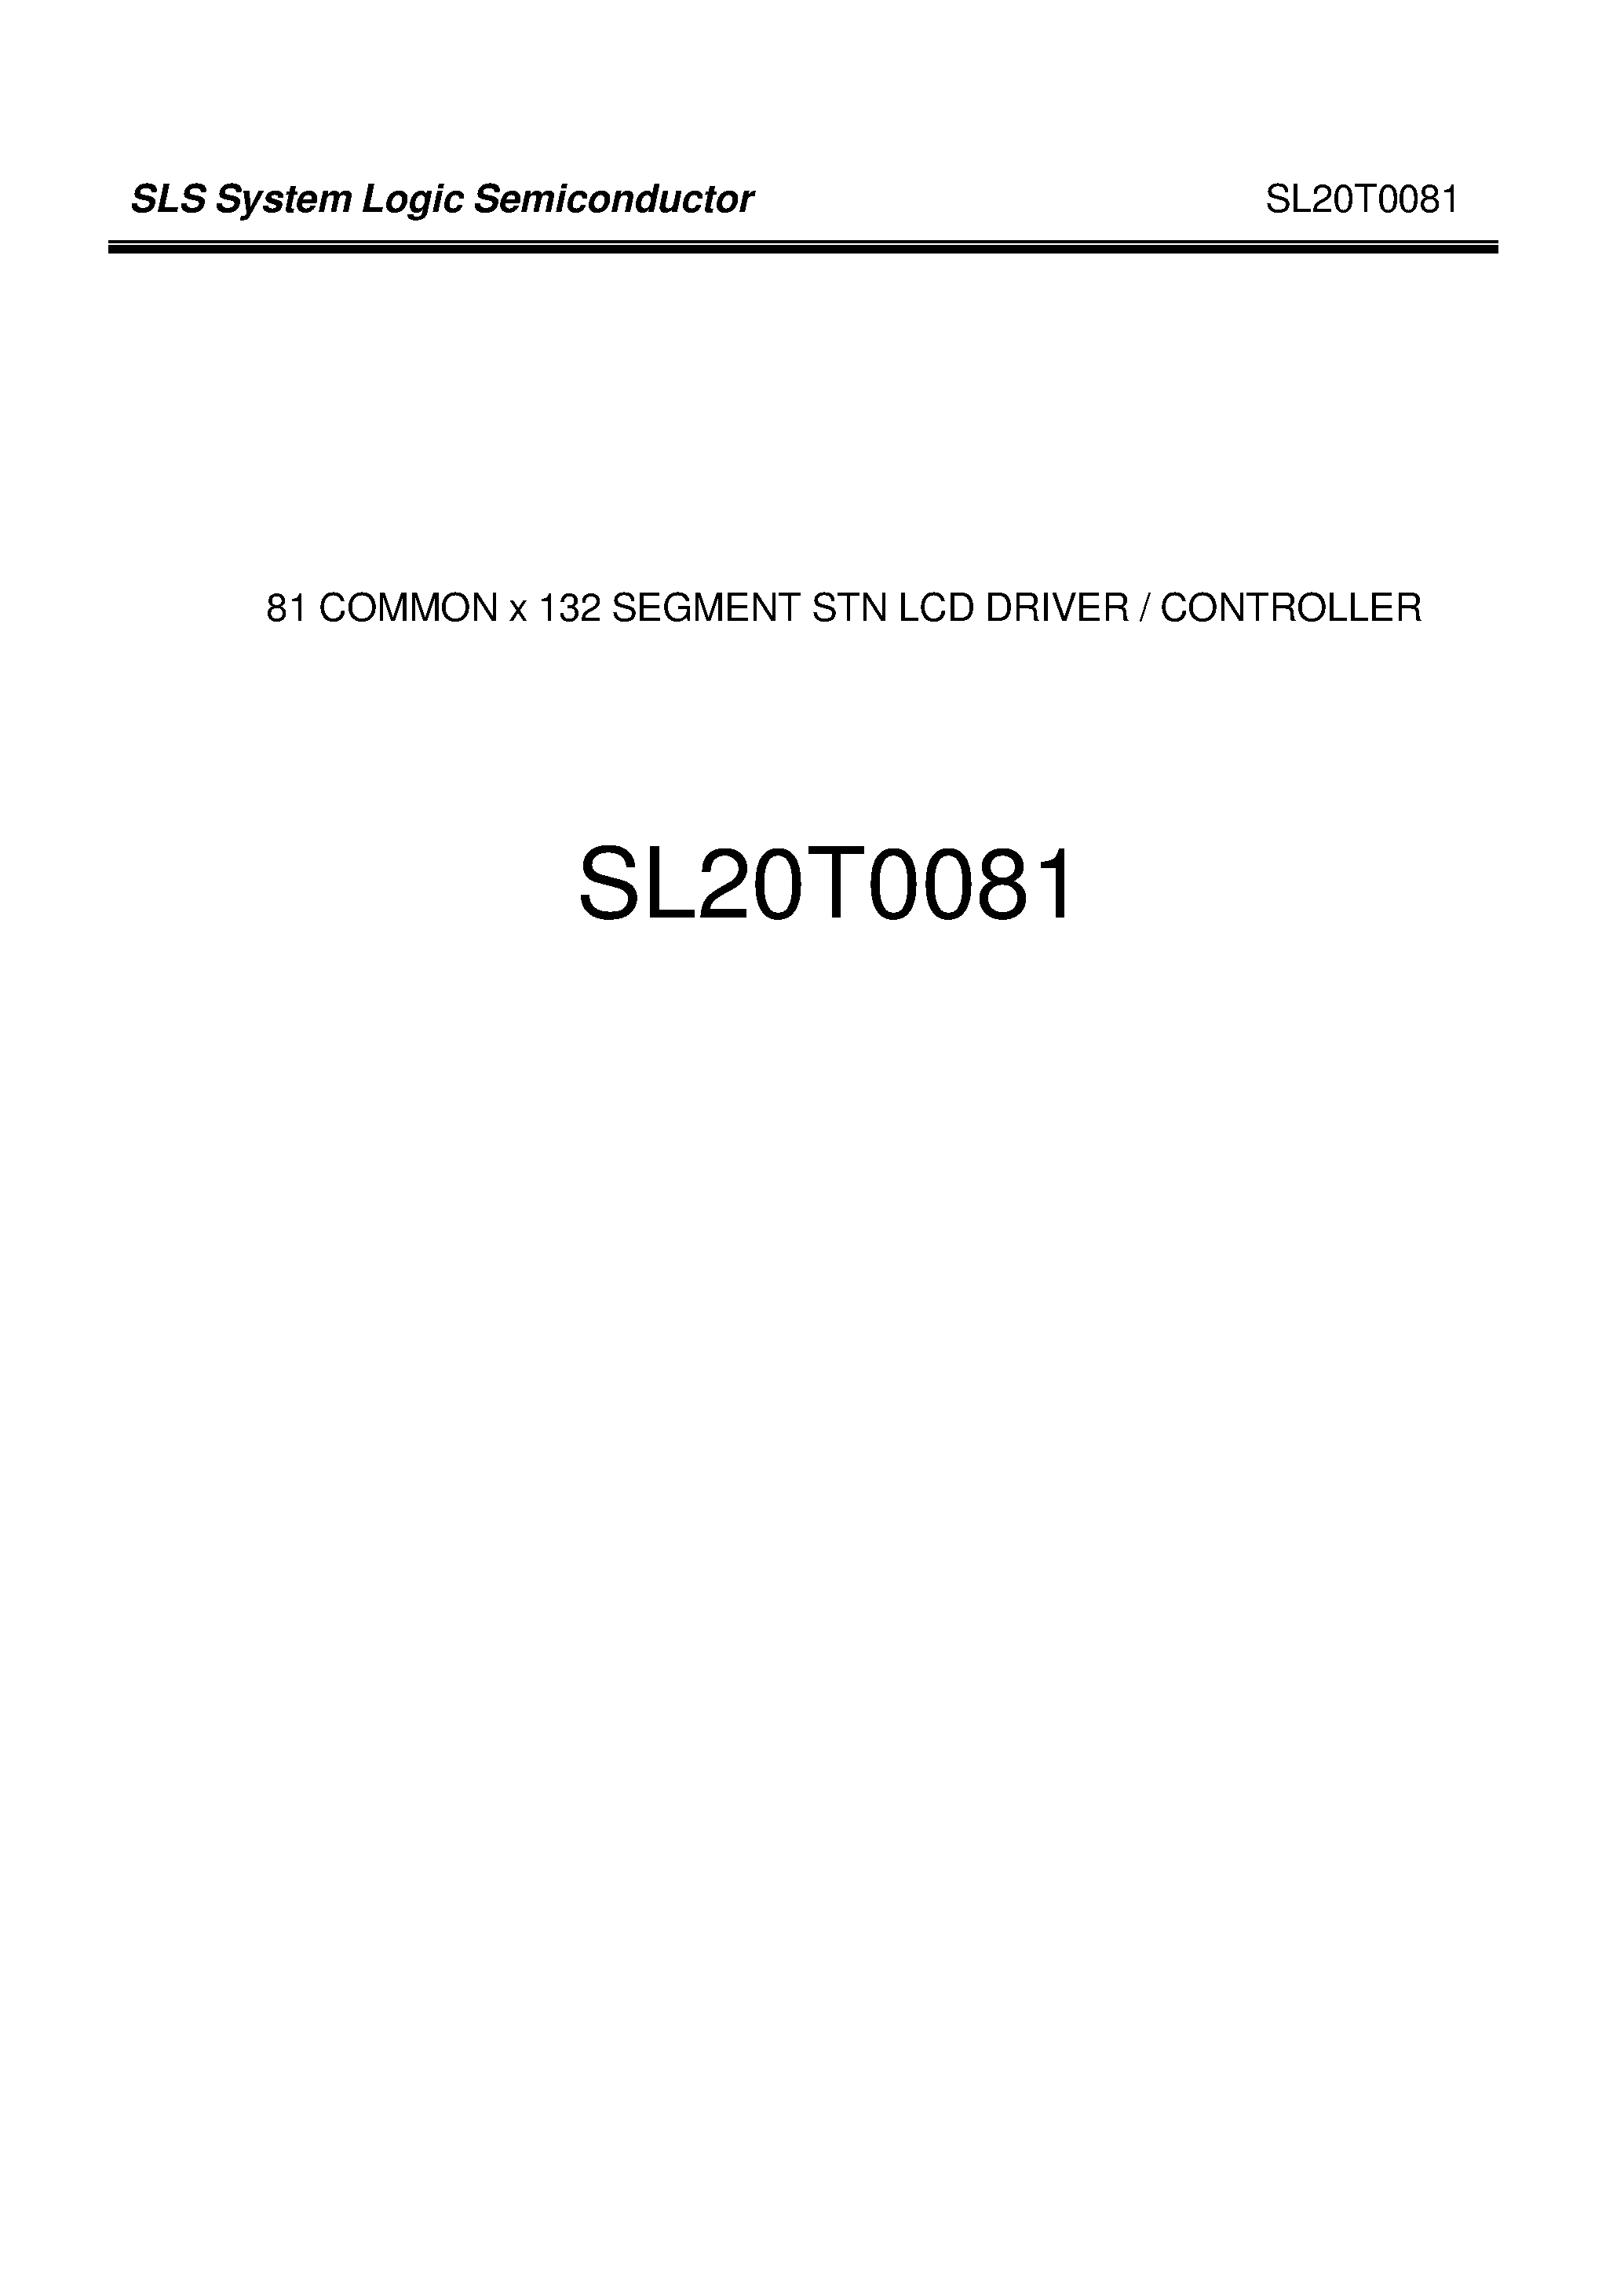 Datasheet SL20T0081 - SLS System Logic Semiconductor page 1